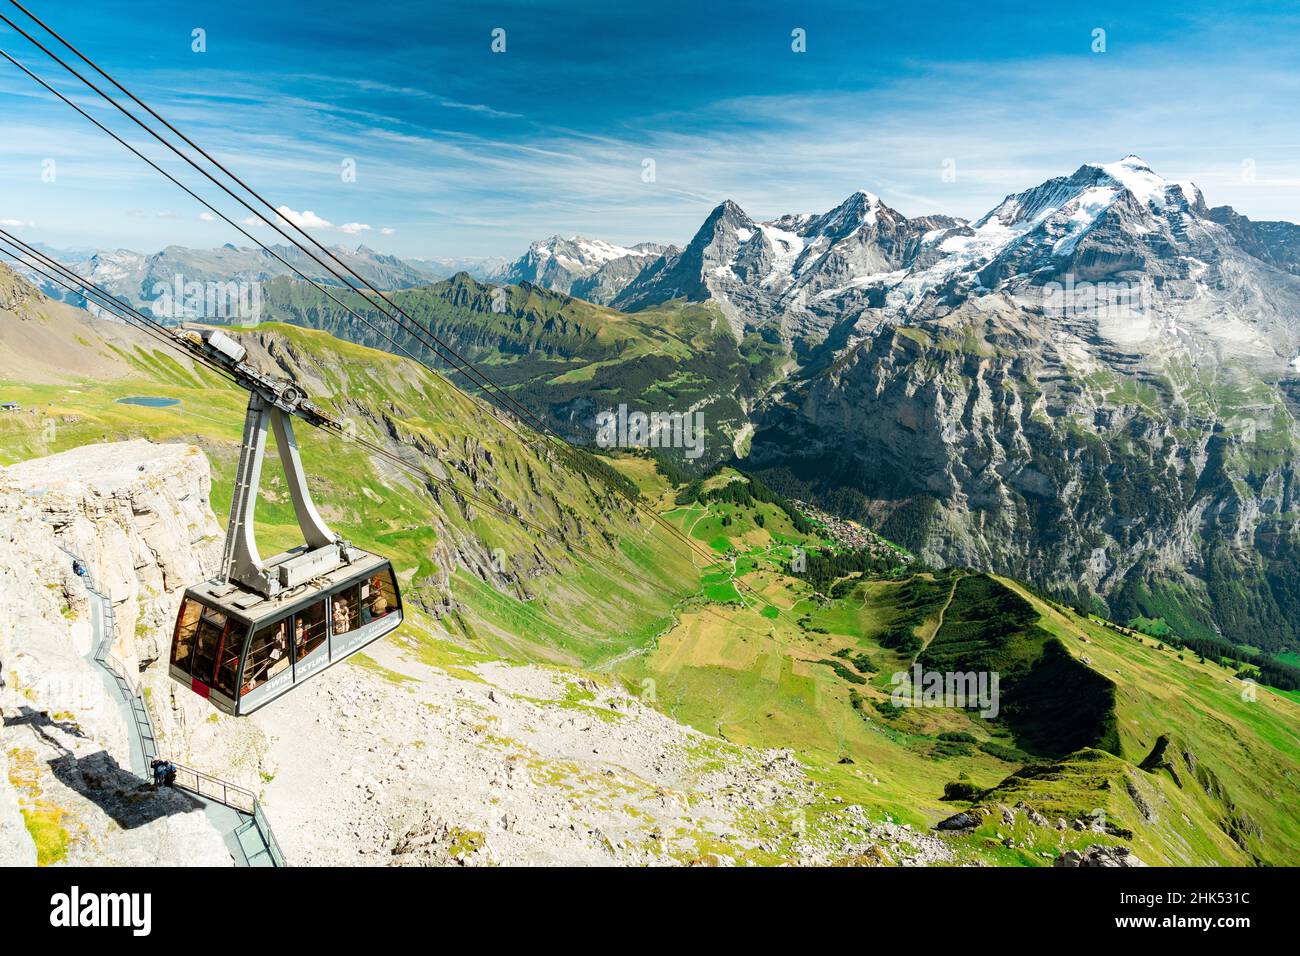 Scenic view of Schilthorn cableway and Swiss Alps, Murren Birg, Jungfrau Region, Bern Canton, Switzerland, Europe Stock Photo